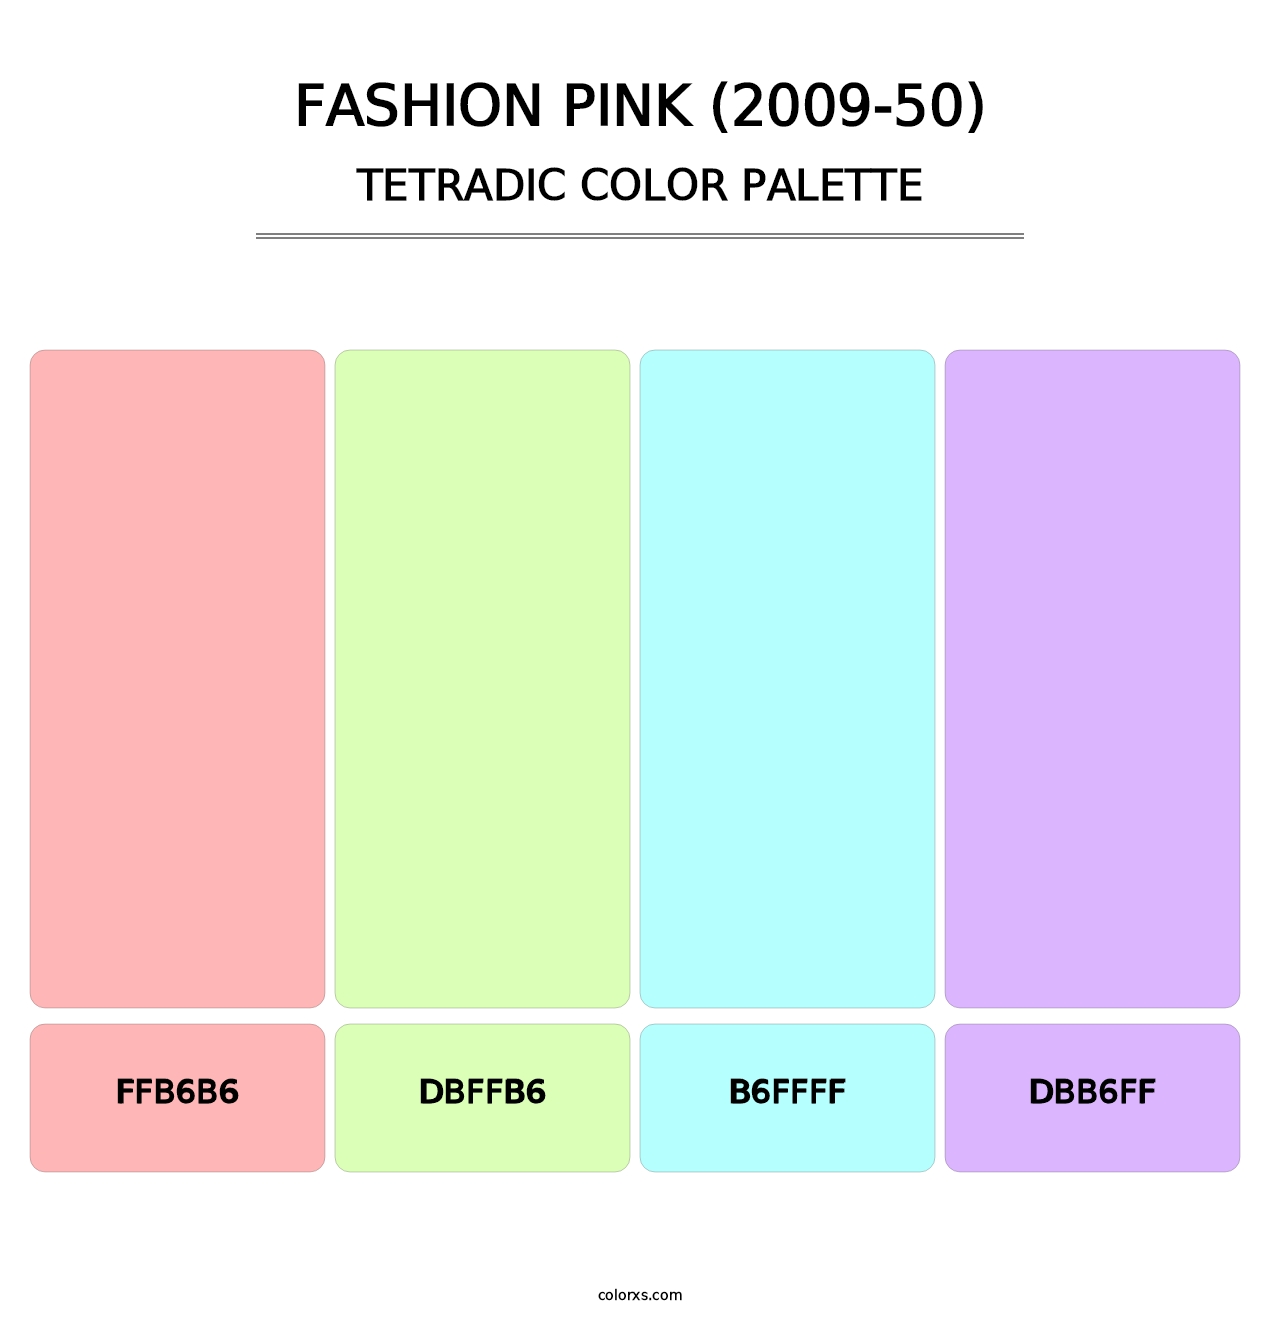 Fashion Pink (2009-50) - Tetradic Color Palette